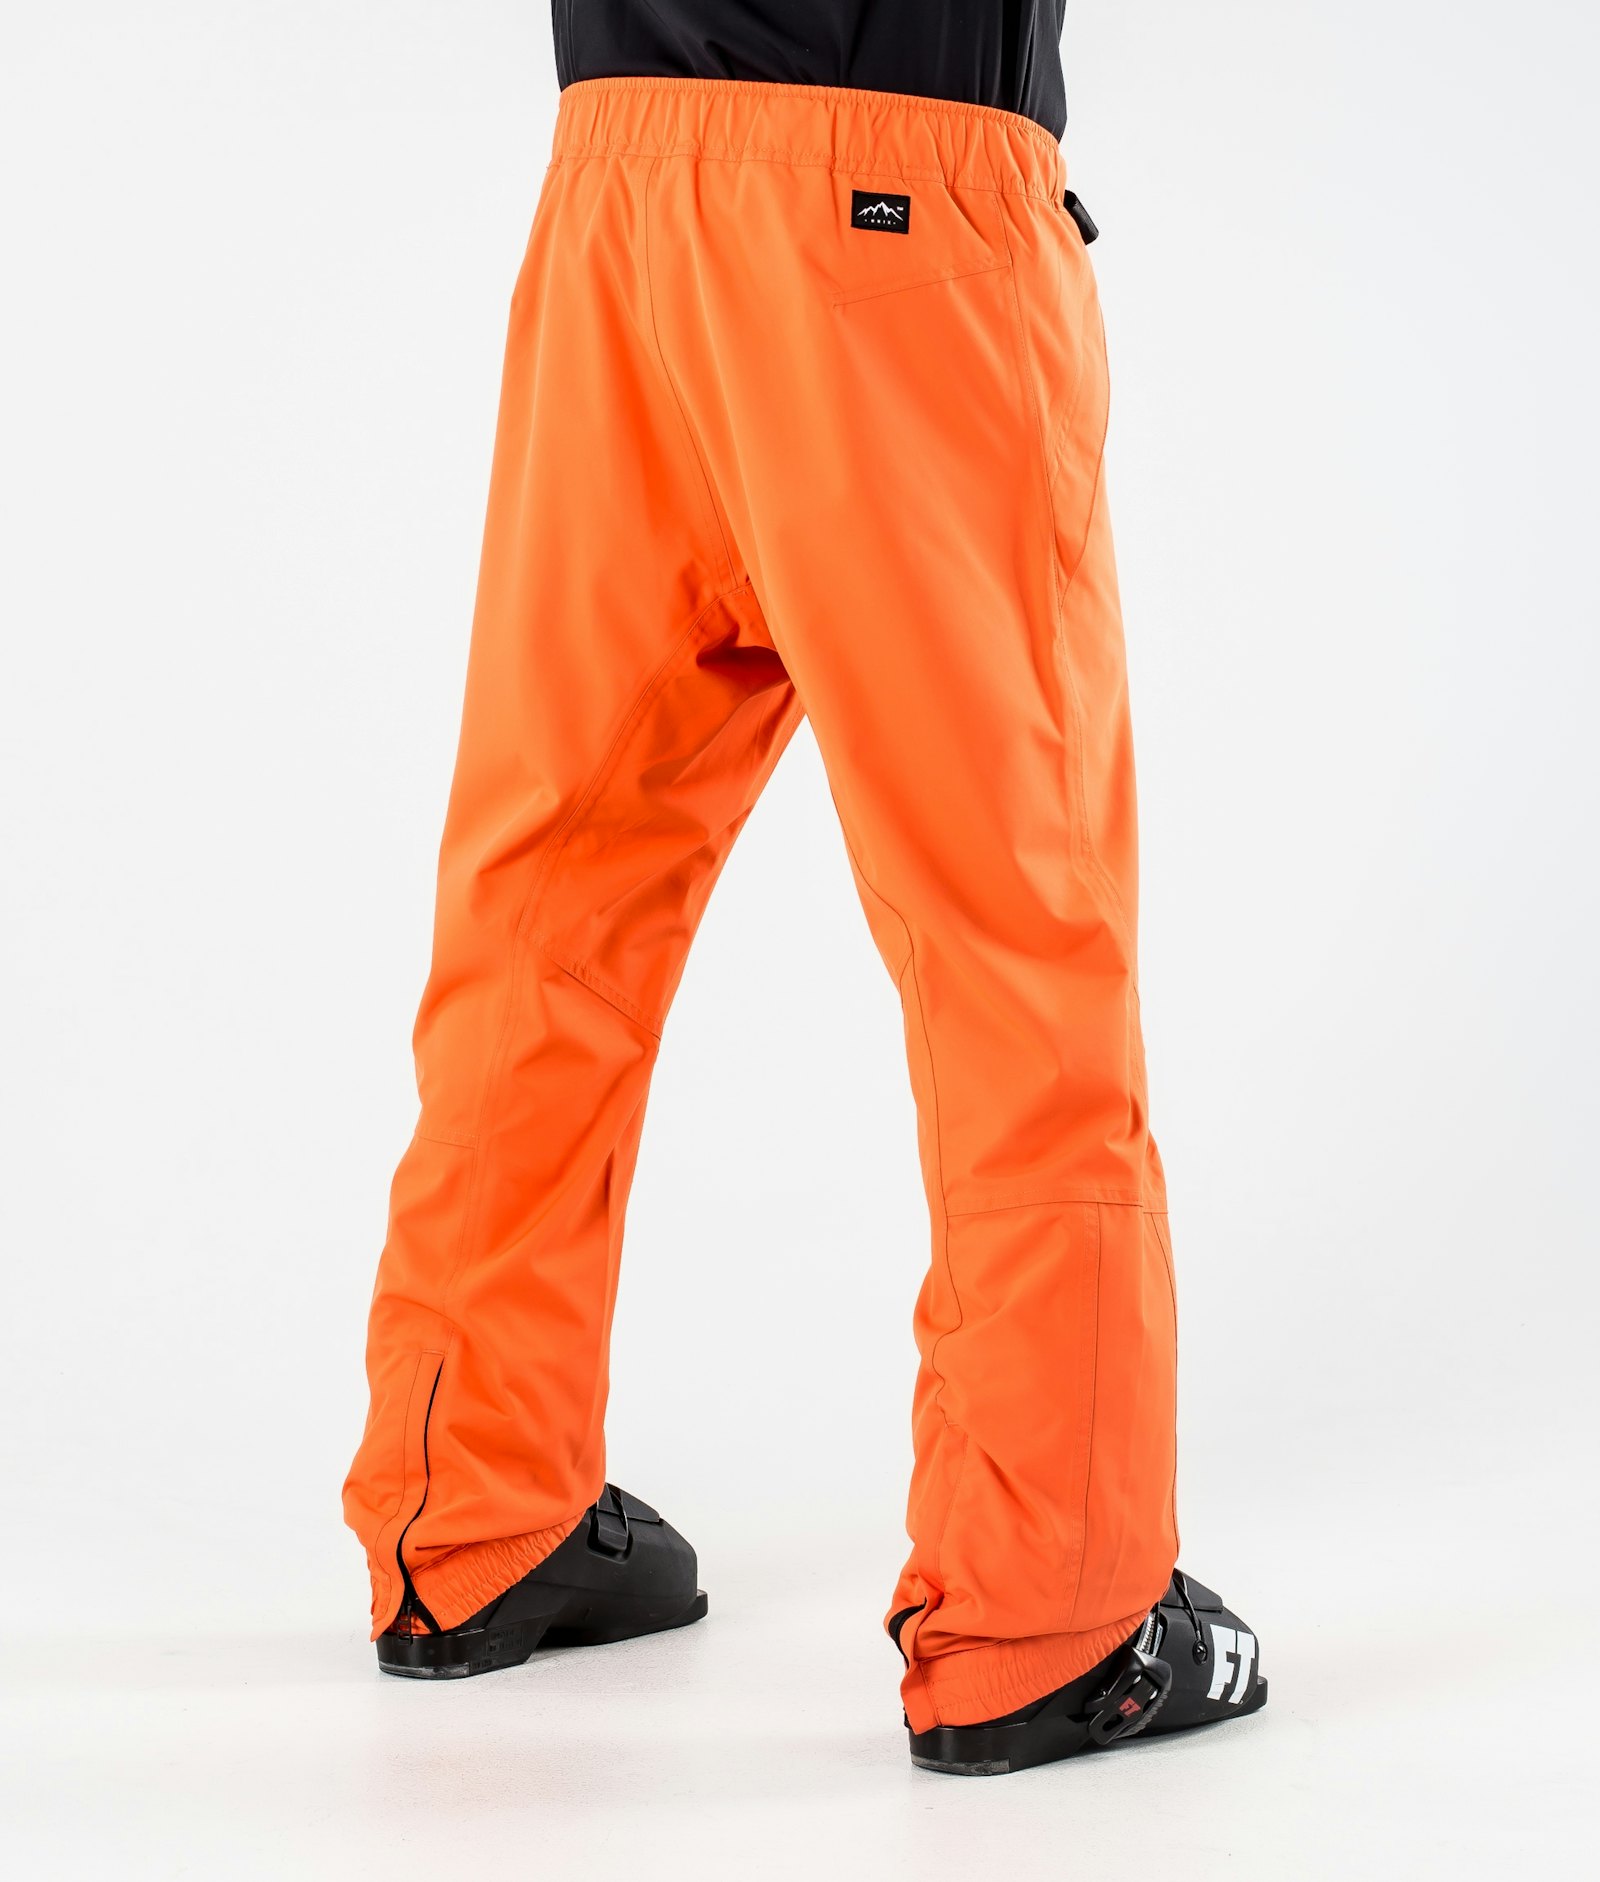 Blizzard 2020 スキーパンツ メンズ Orange